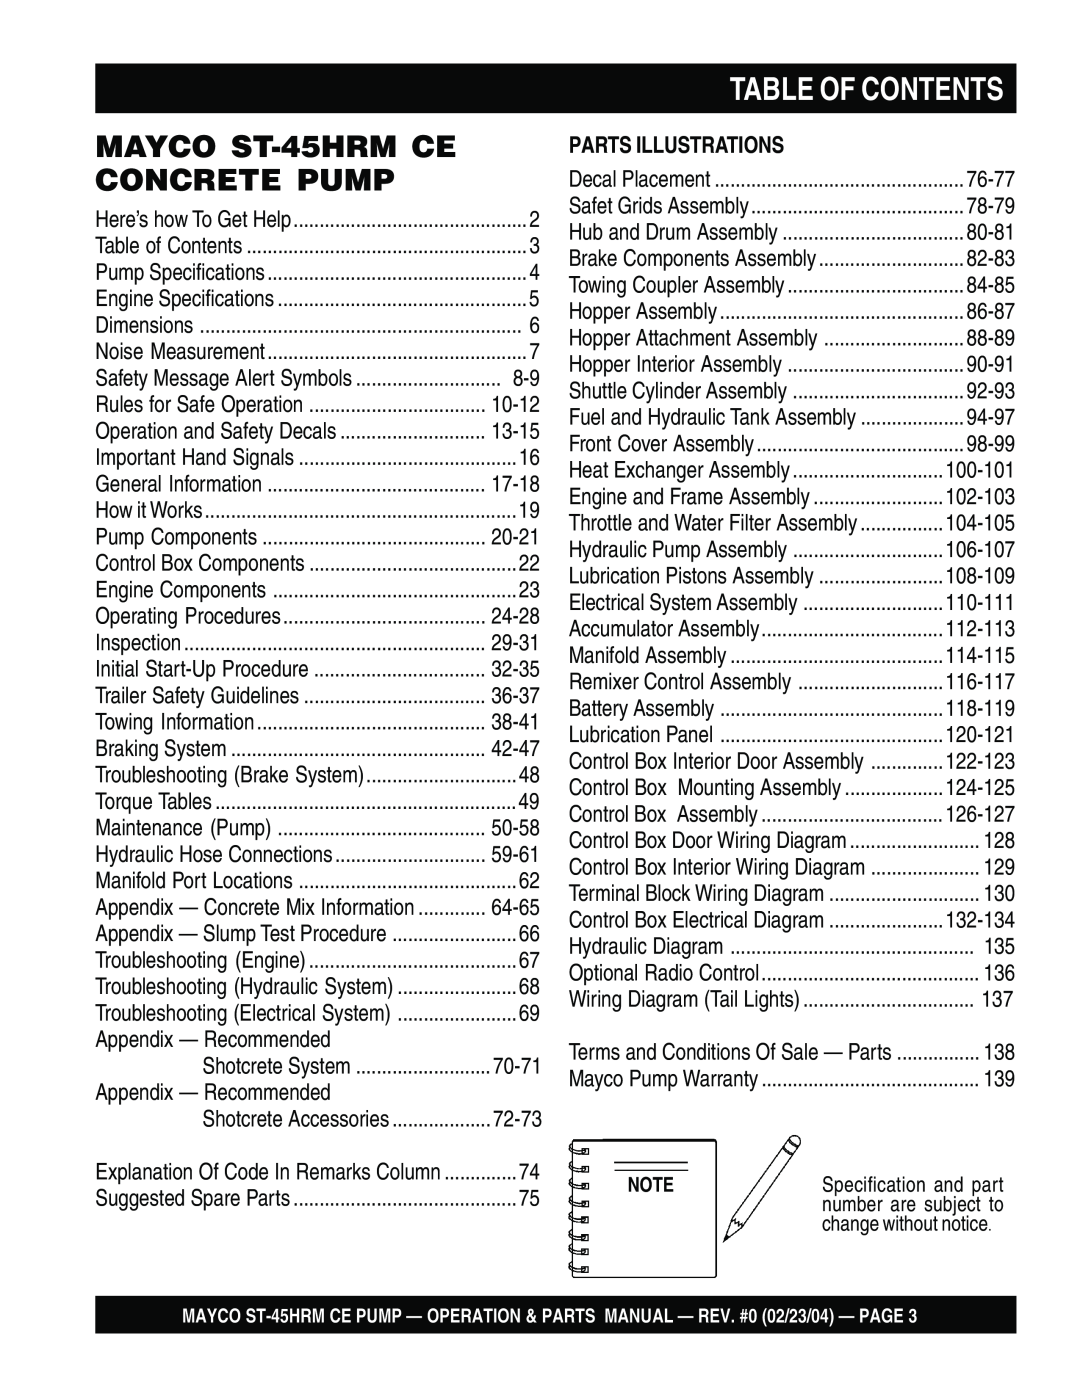 Multiquip ST-45HRM CE manual Table Of Contents, MAYCO ST-45HRMCE, Concrete Pump, Parts Illustrations 